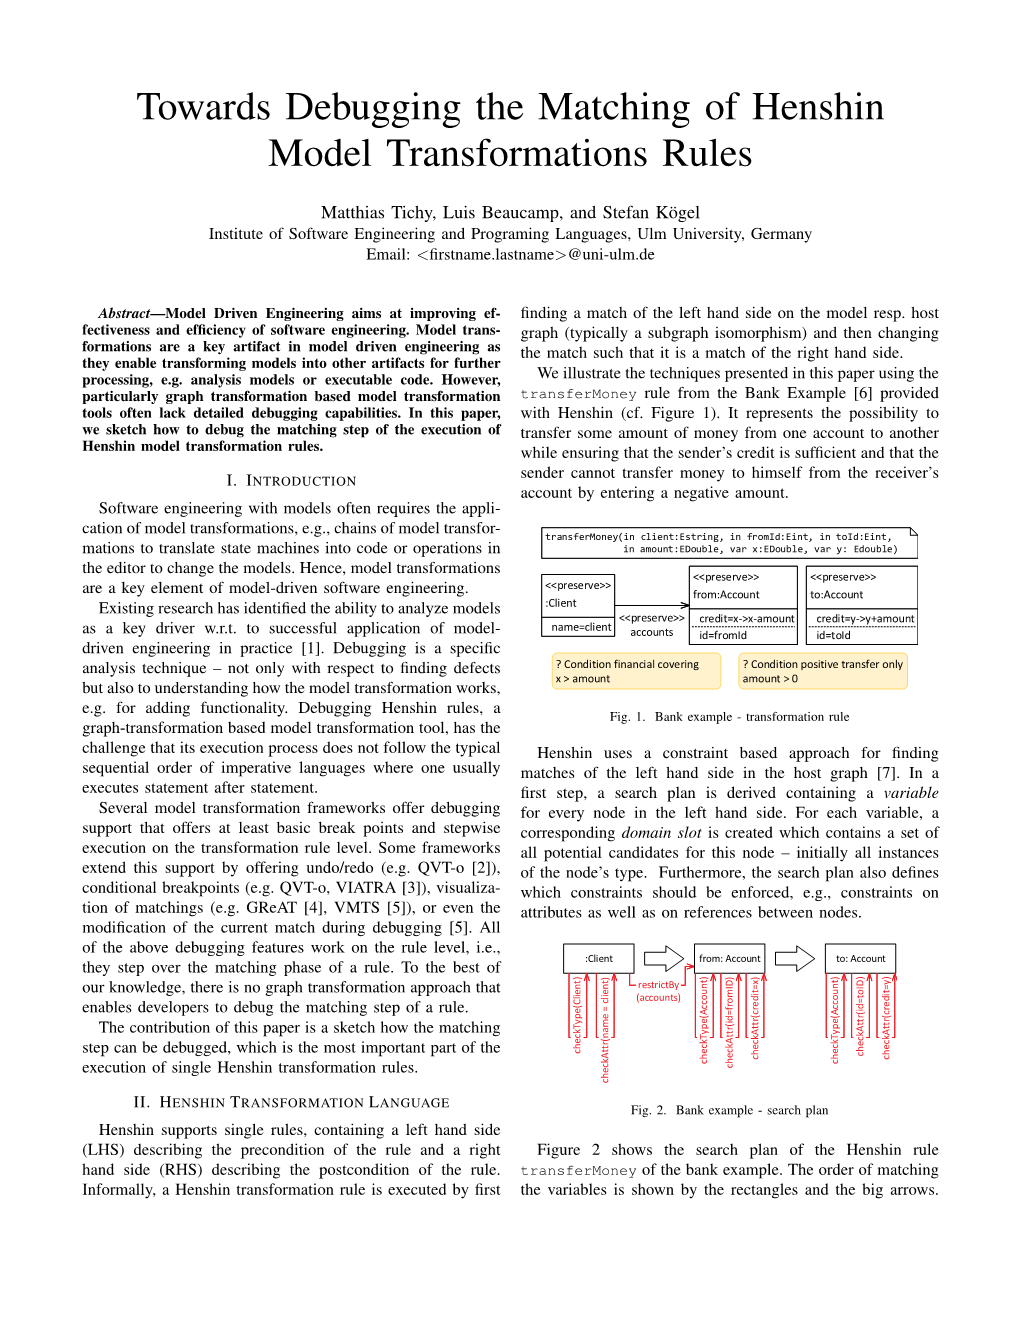 Towards Debugging the Matching of Henshin Model Transformations Rules